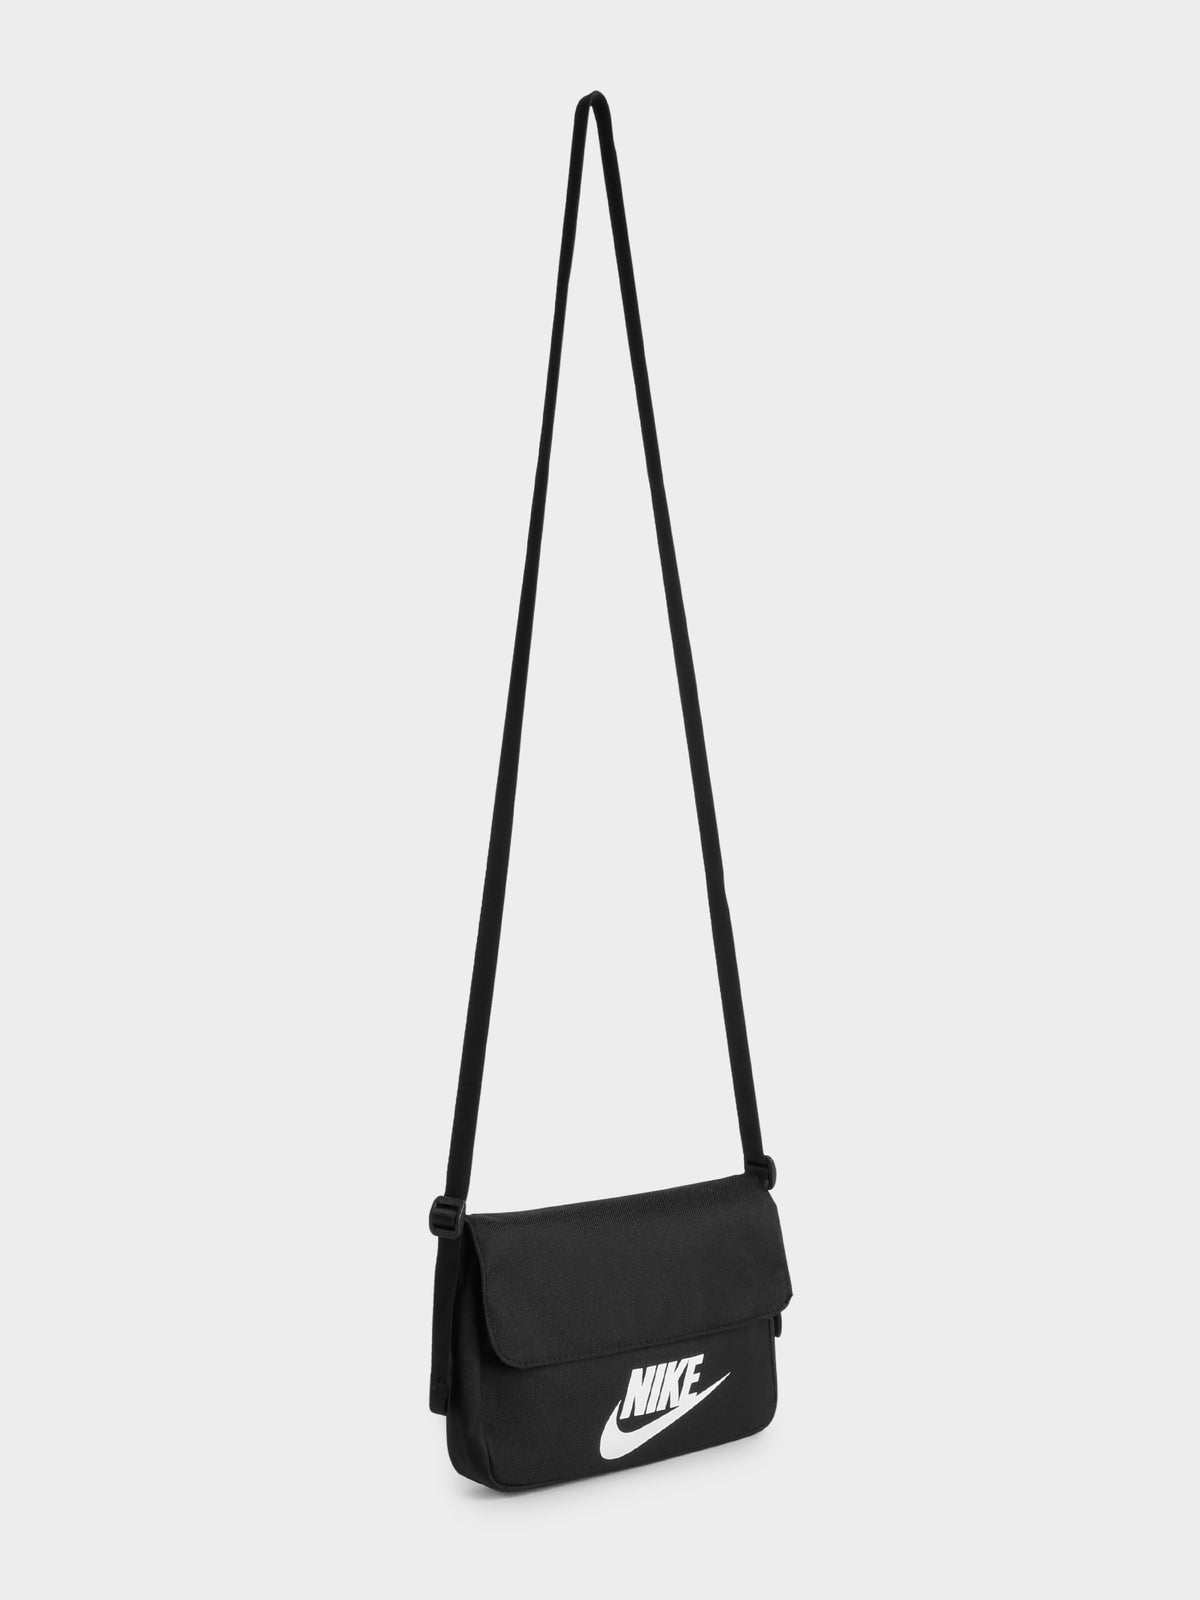 NSW Futra Sling Bag in Black